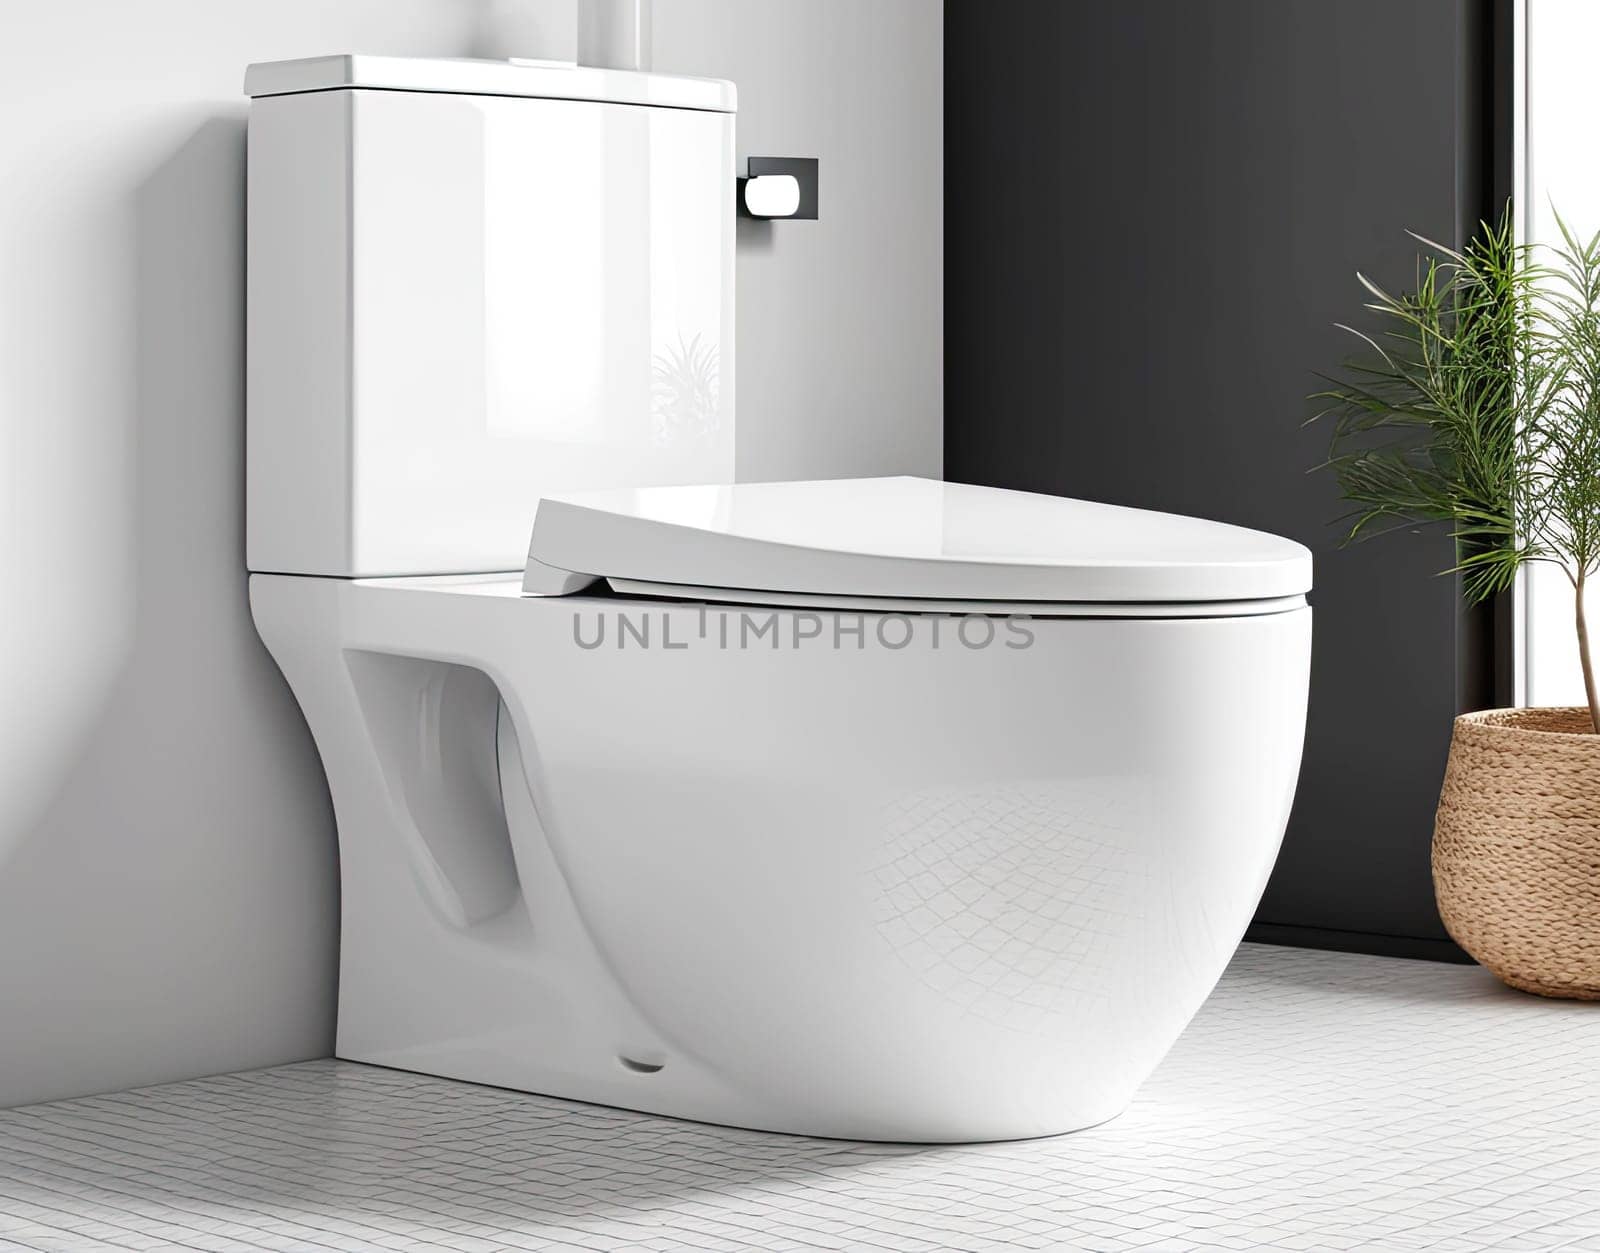 modern bathroom interior with sleek toilet bowl